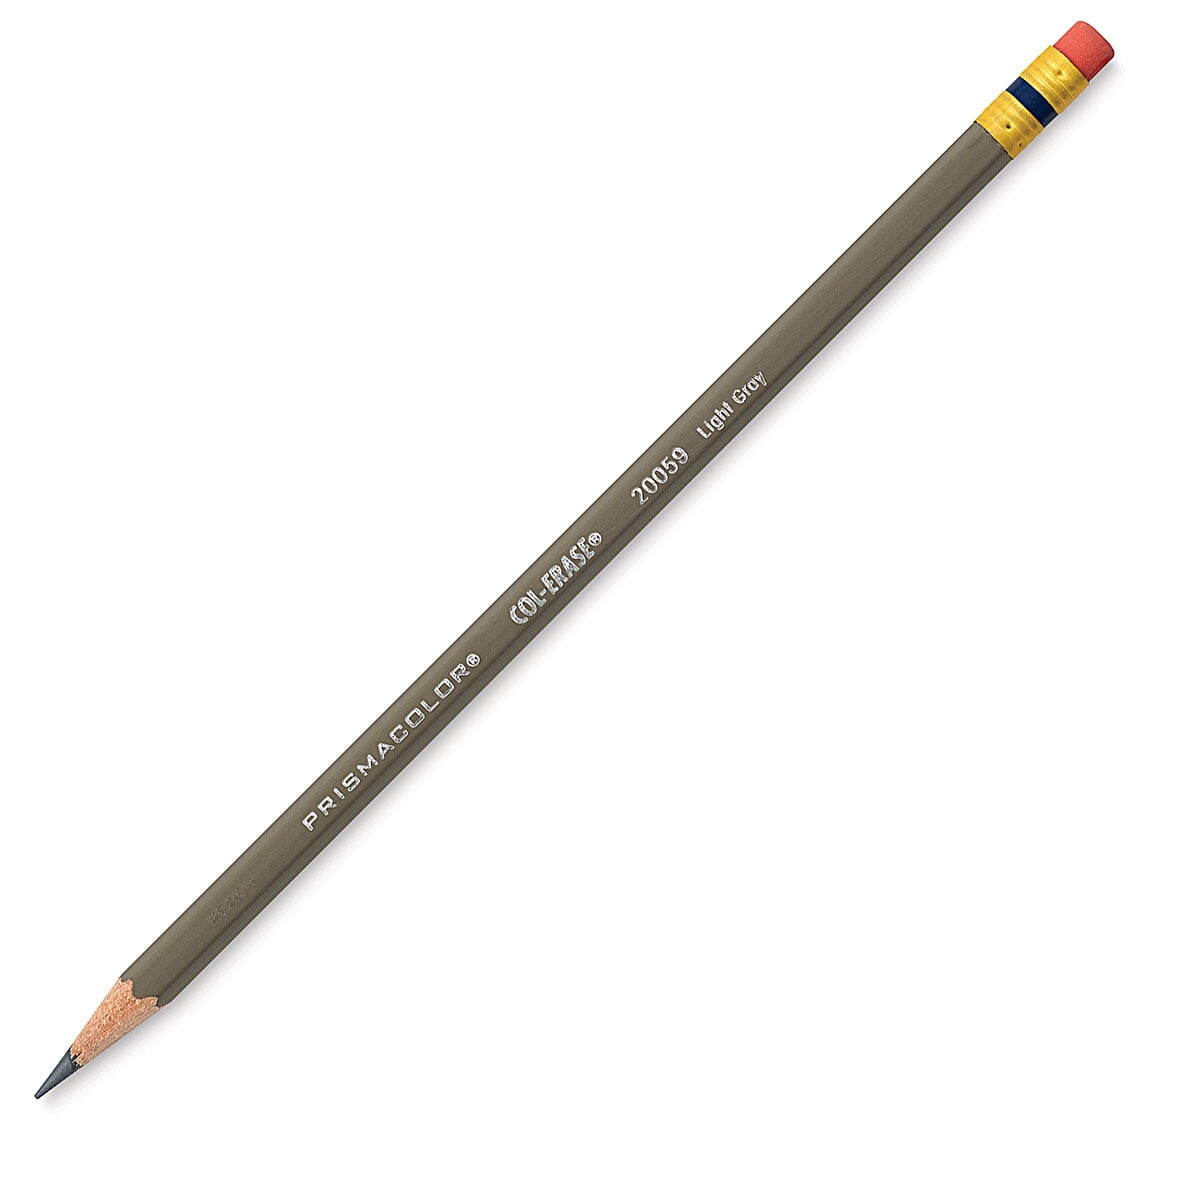 Prismacolor Col-Erase Erasable Colored Pencil, 12-Count, Light Peach (20056)